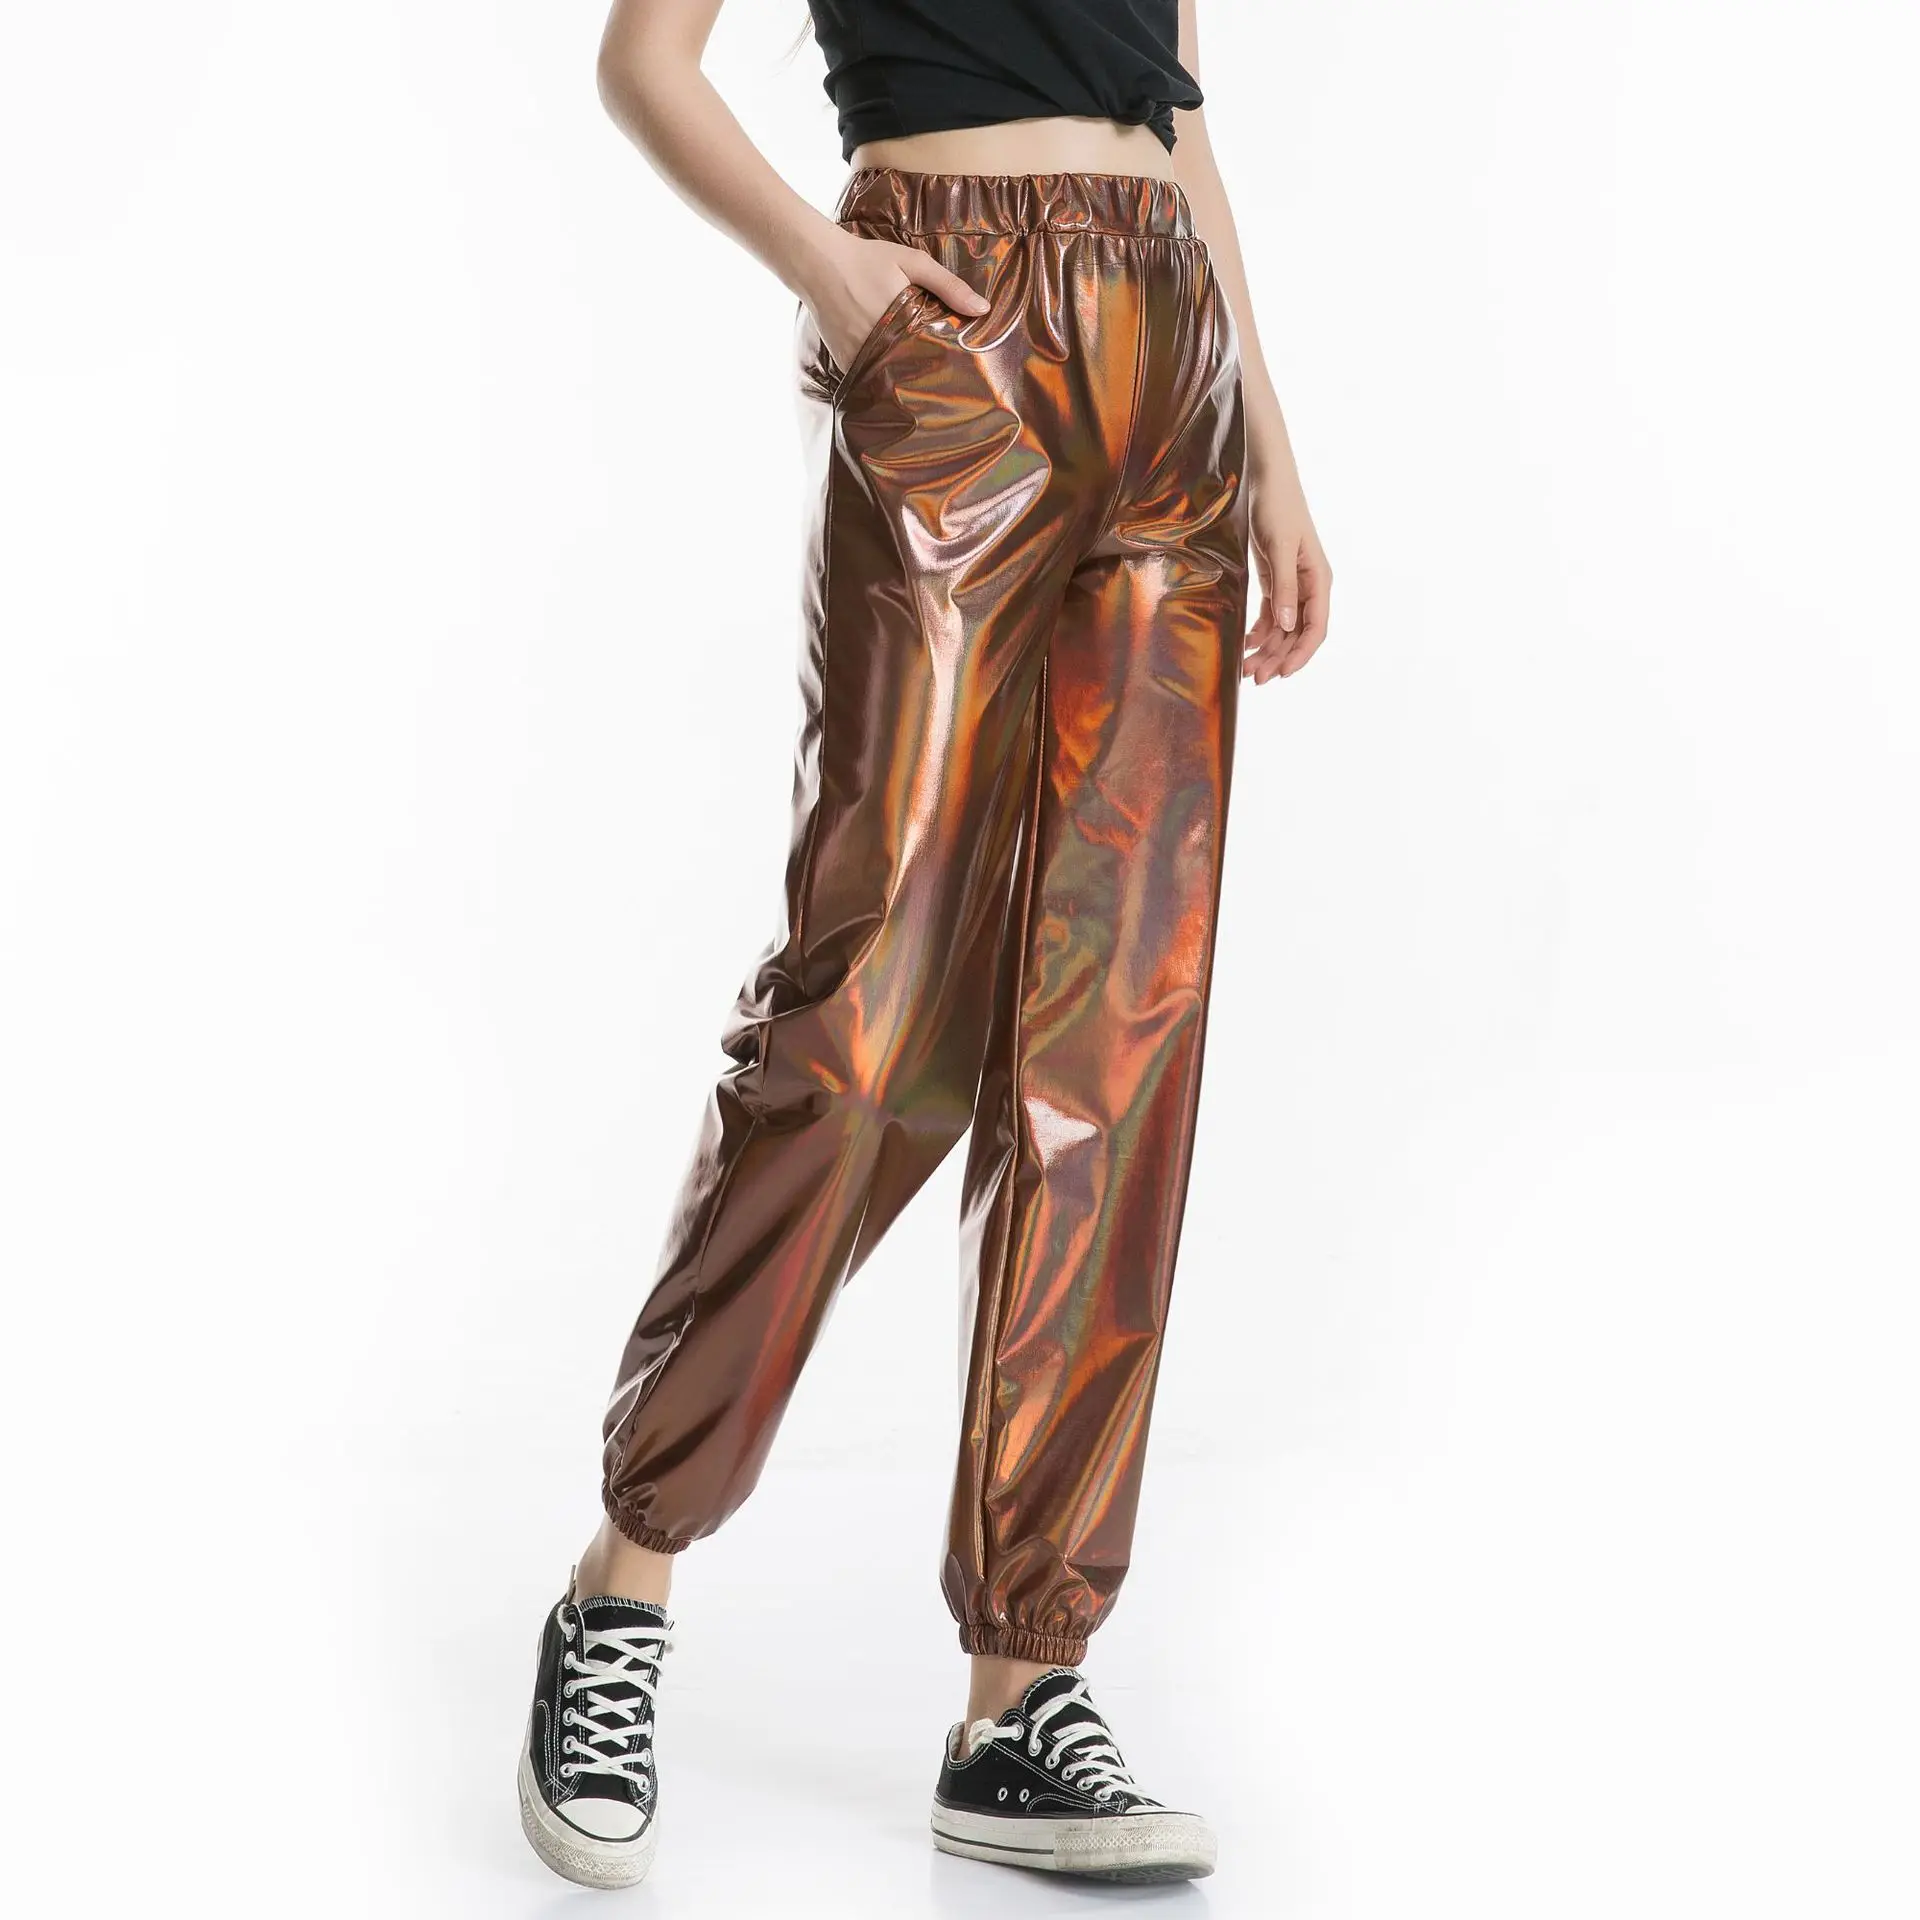 

Metallic Shiny Jogger Pants Women Harem Hip Hop High Waisted Glittening Streetwear Elastic Trousers Smooth Reflective Pants